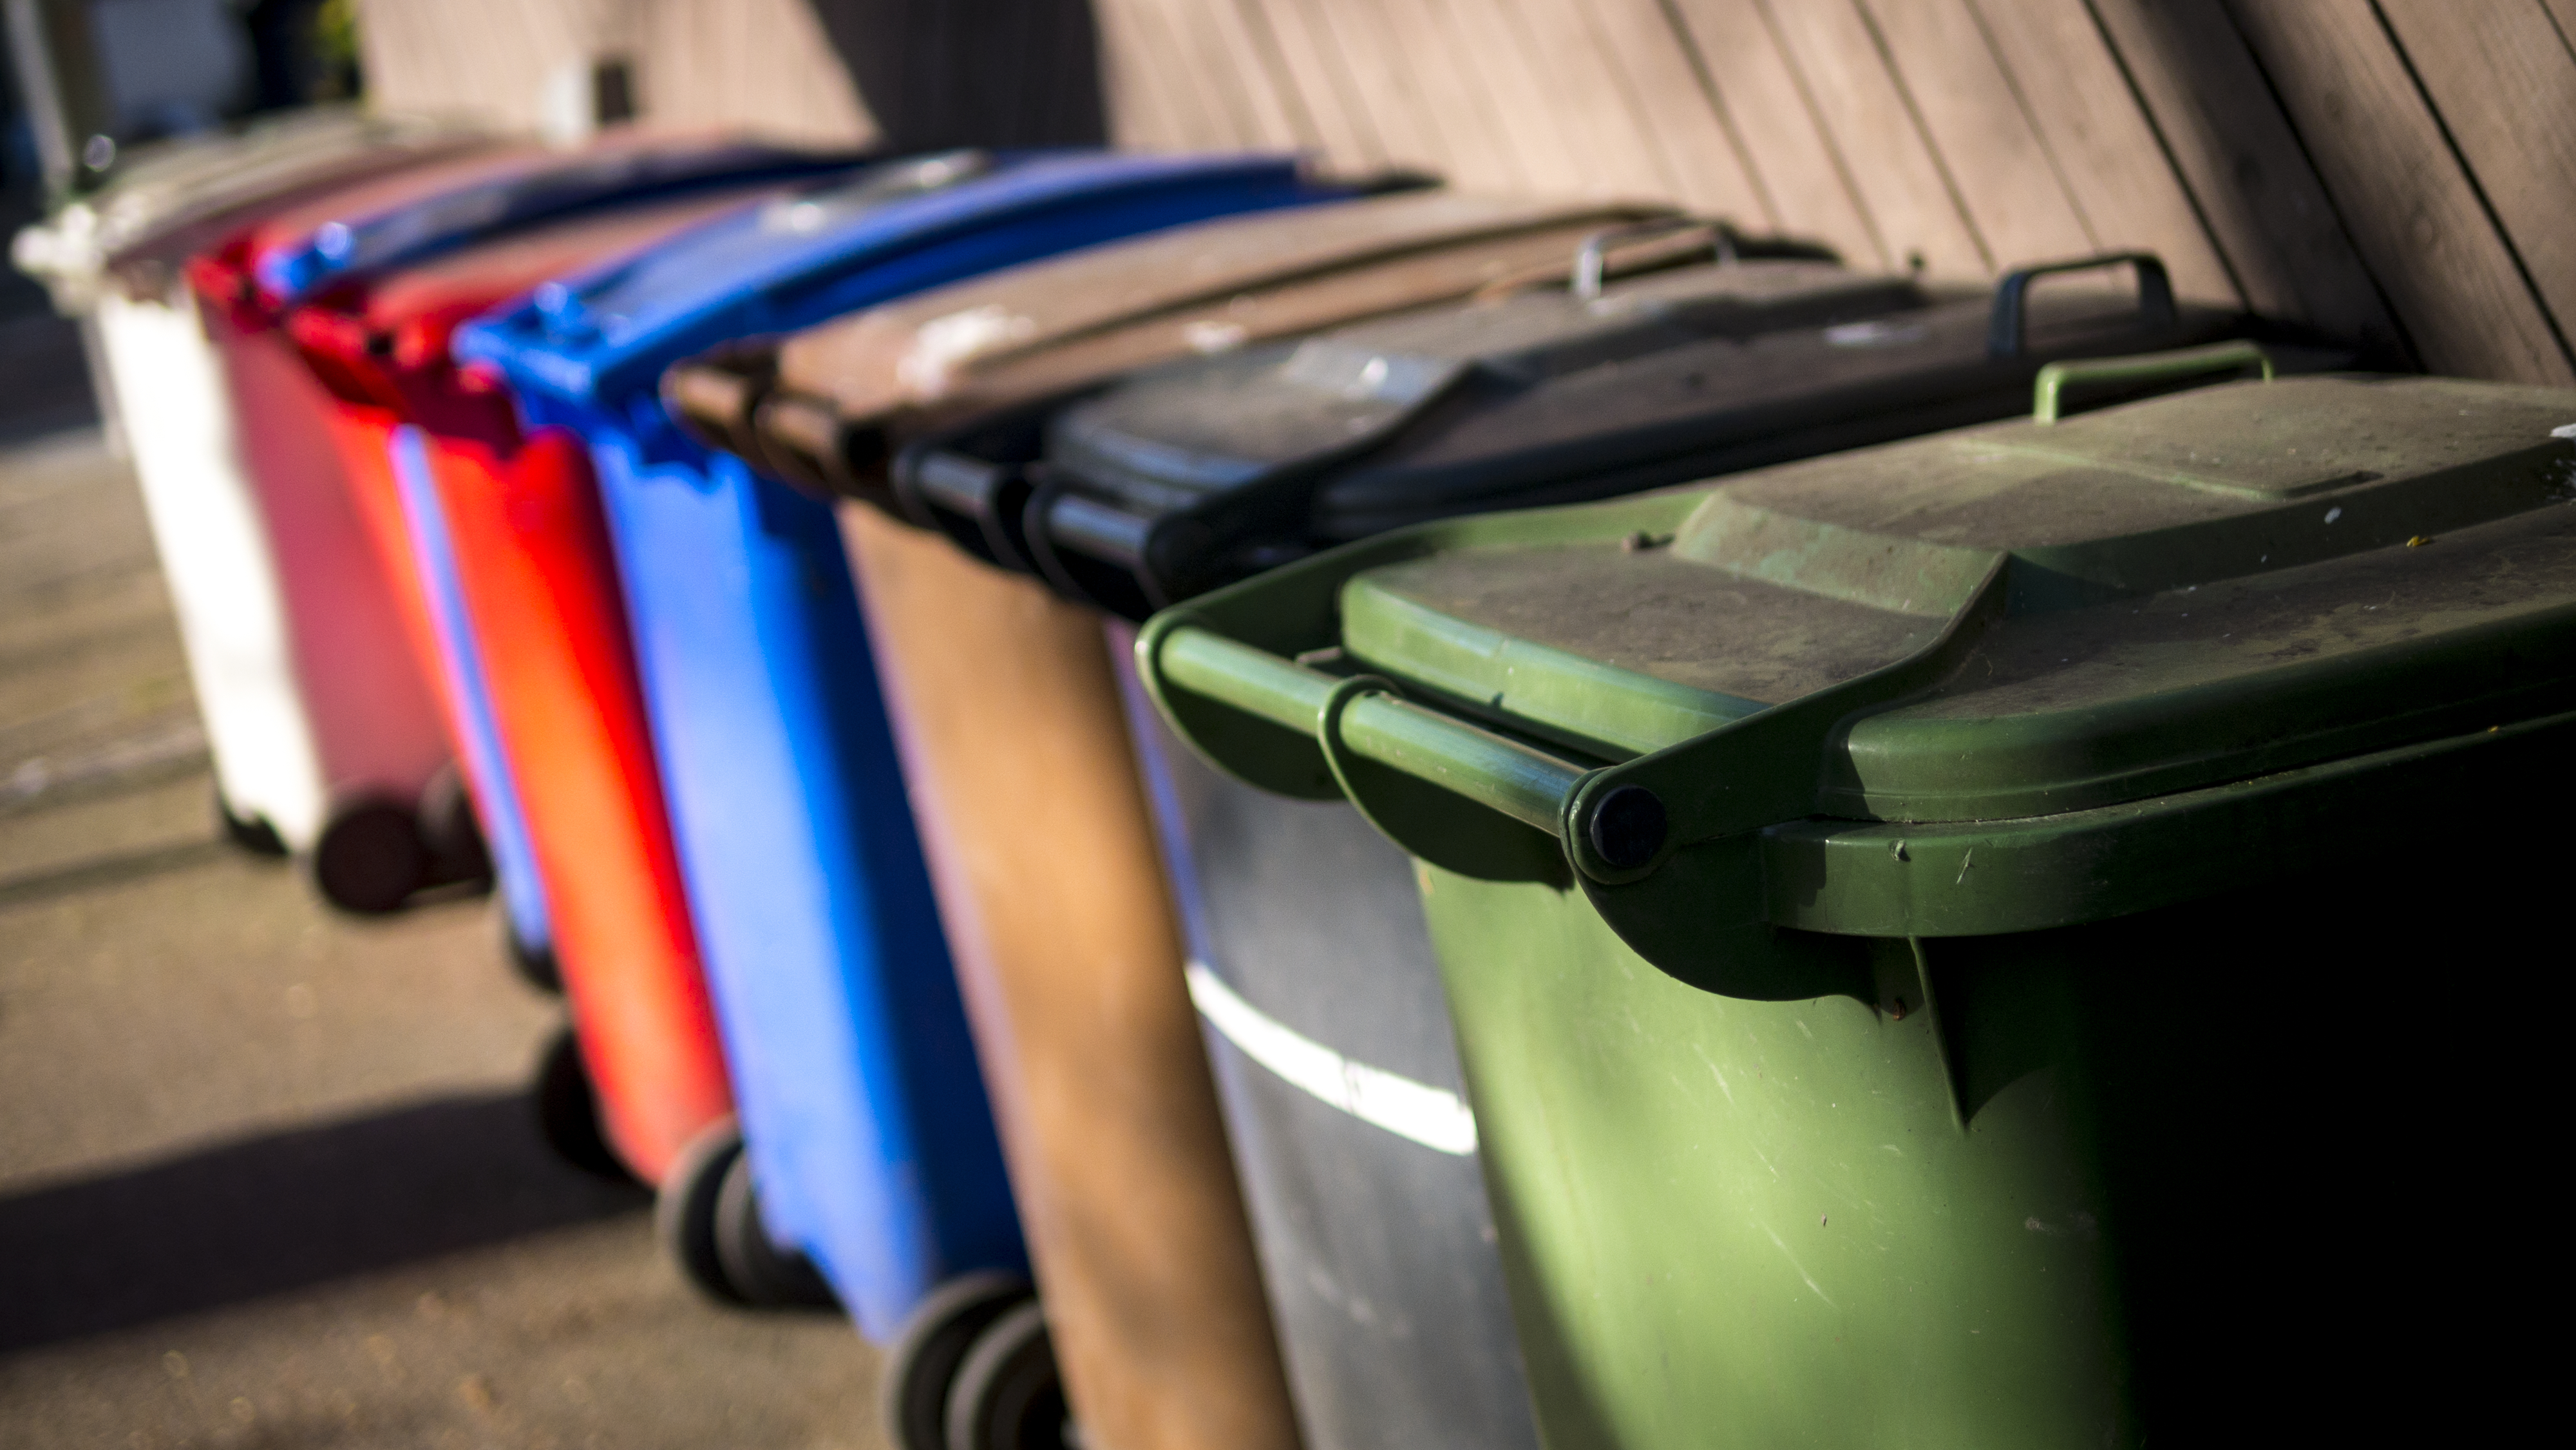 Wheelie Bins for Recycled Rubbish (lenscap67&mdash;Getty Images/iStockphoto)